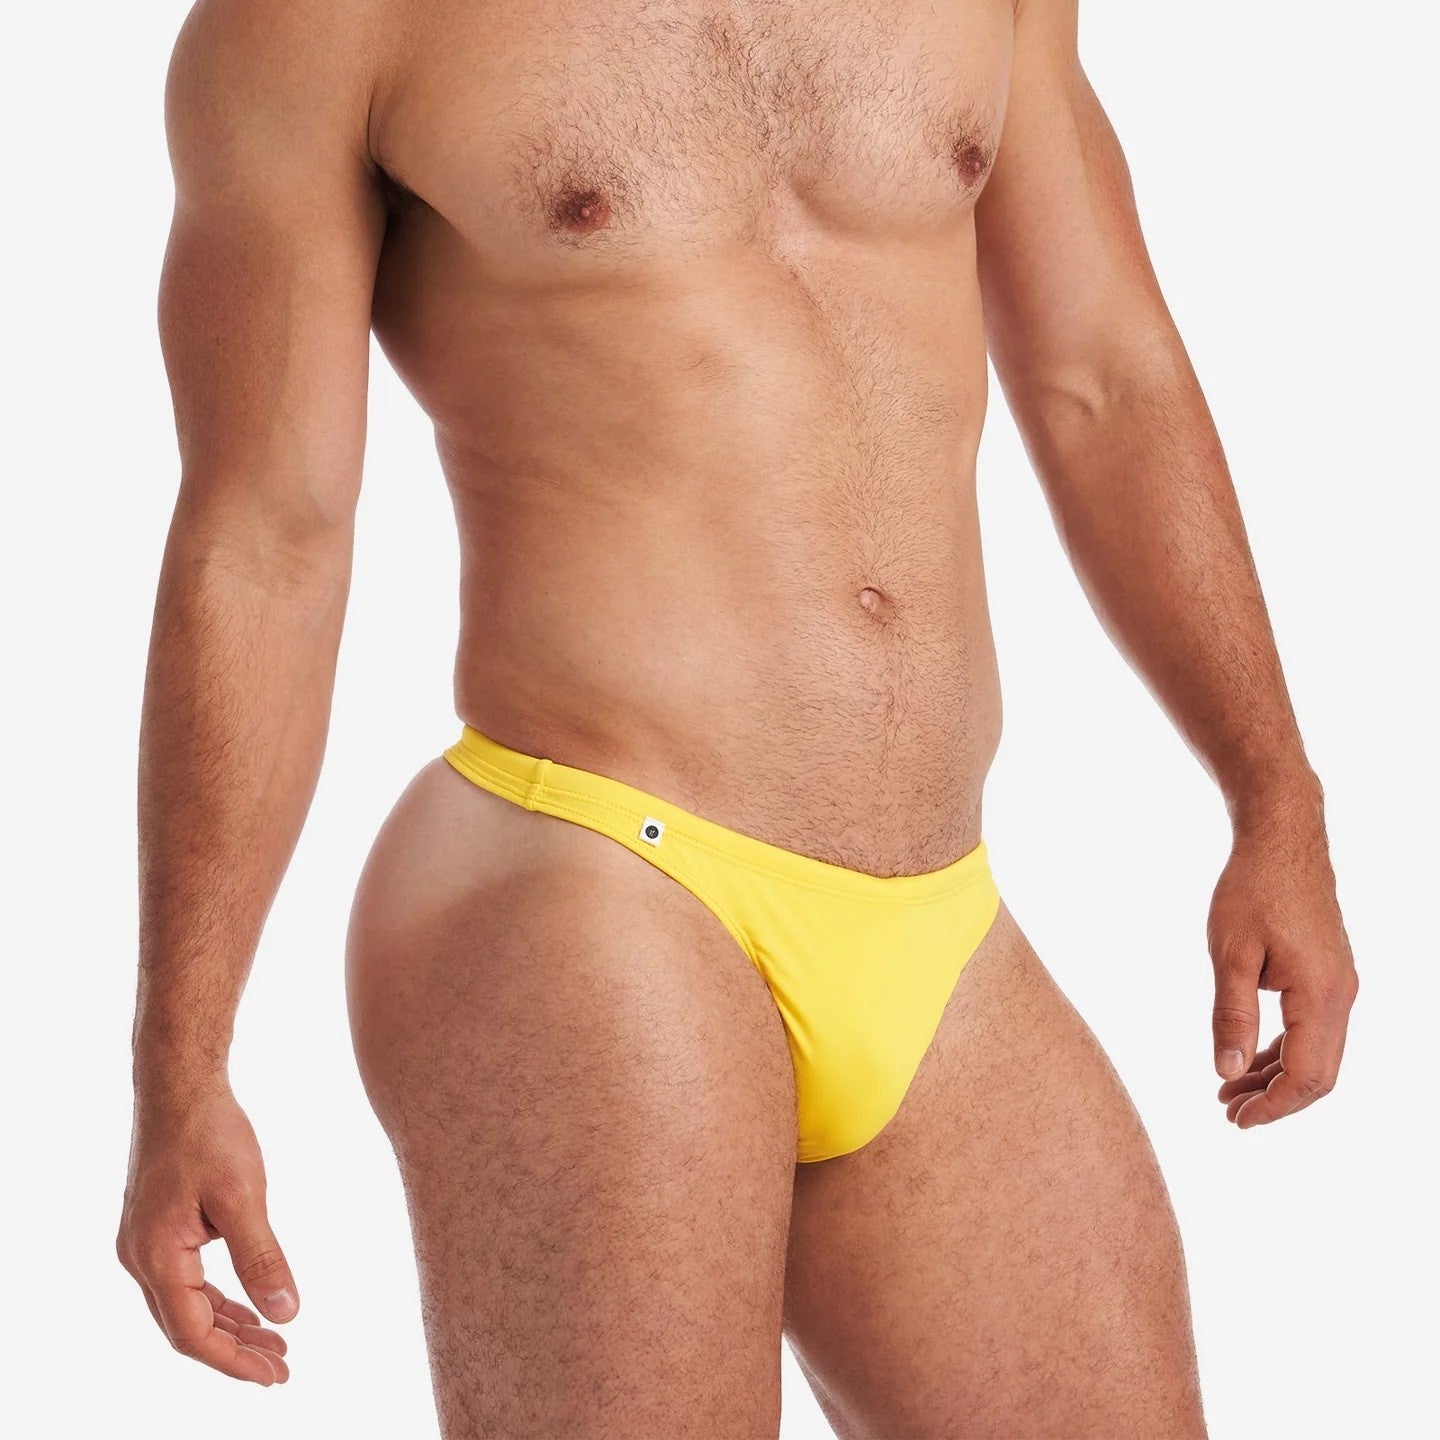 MANLY BASTOU men's yellow swimwear